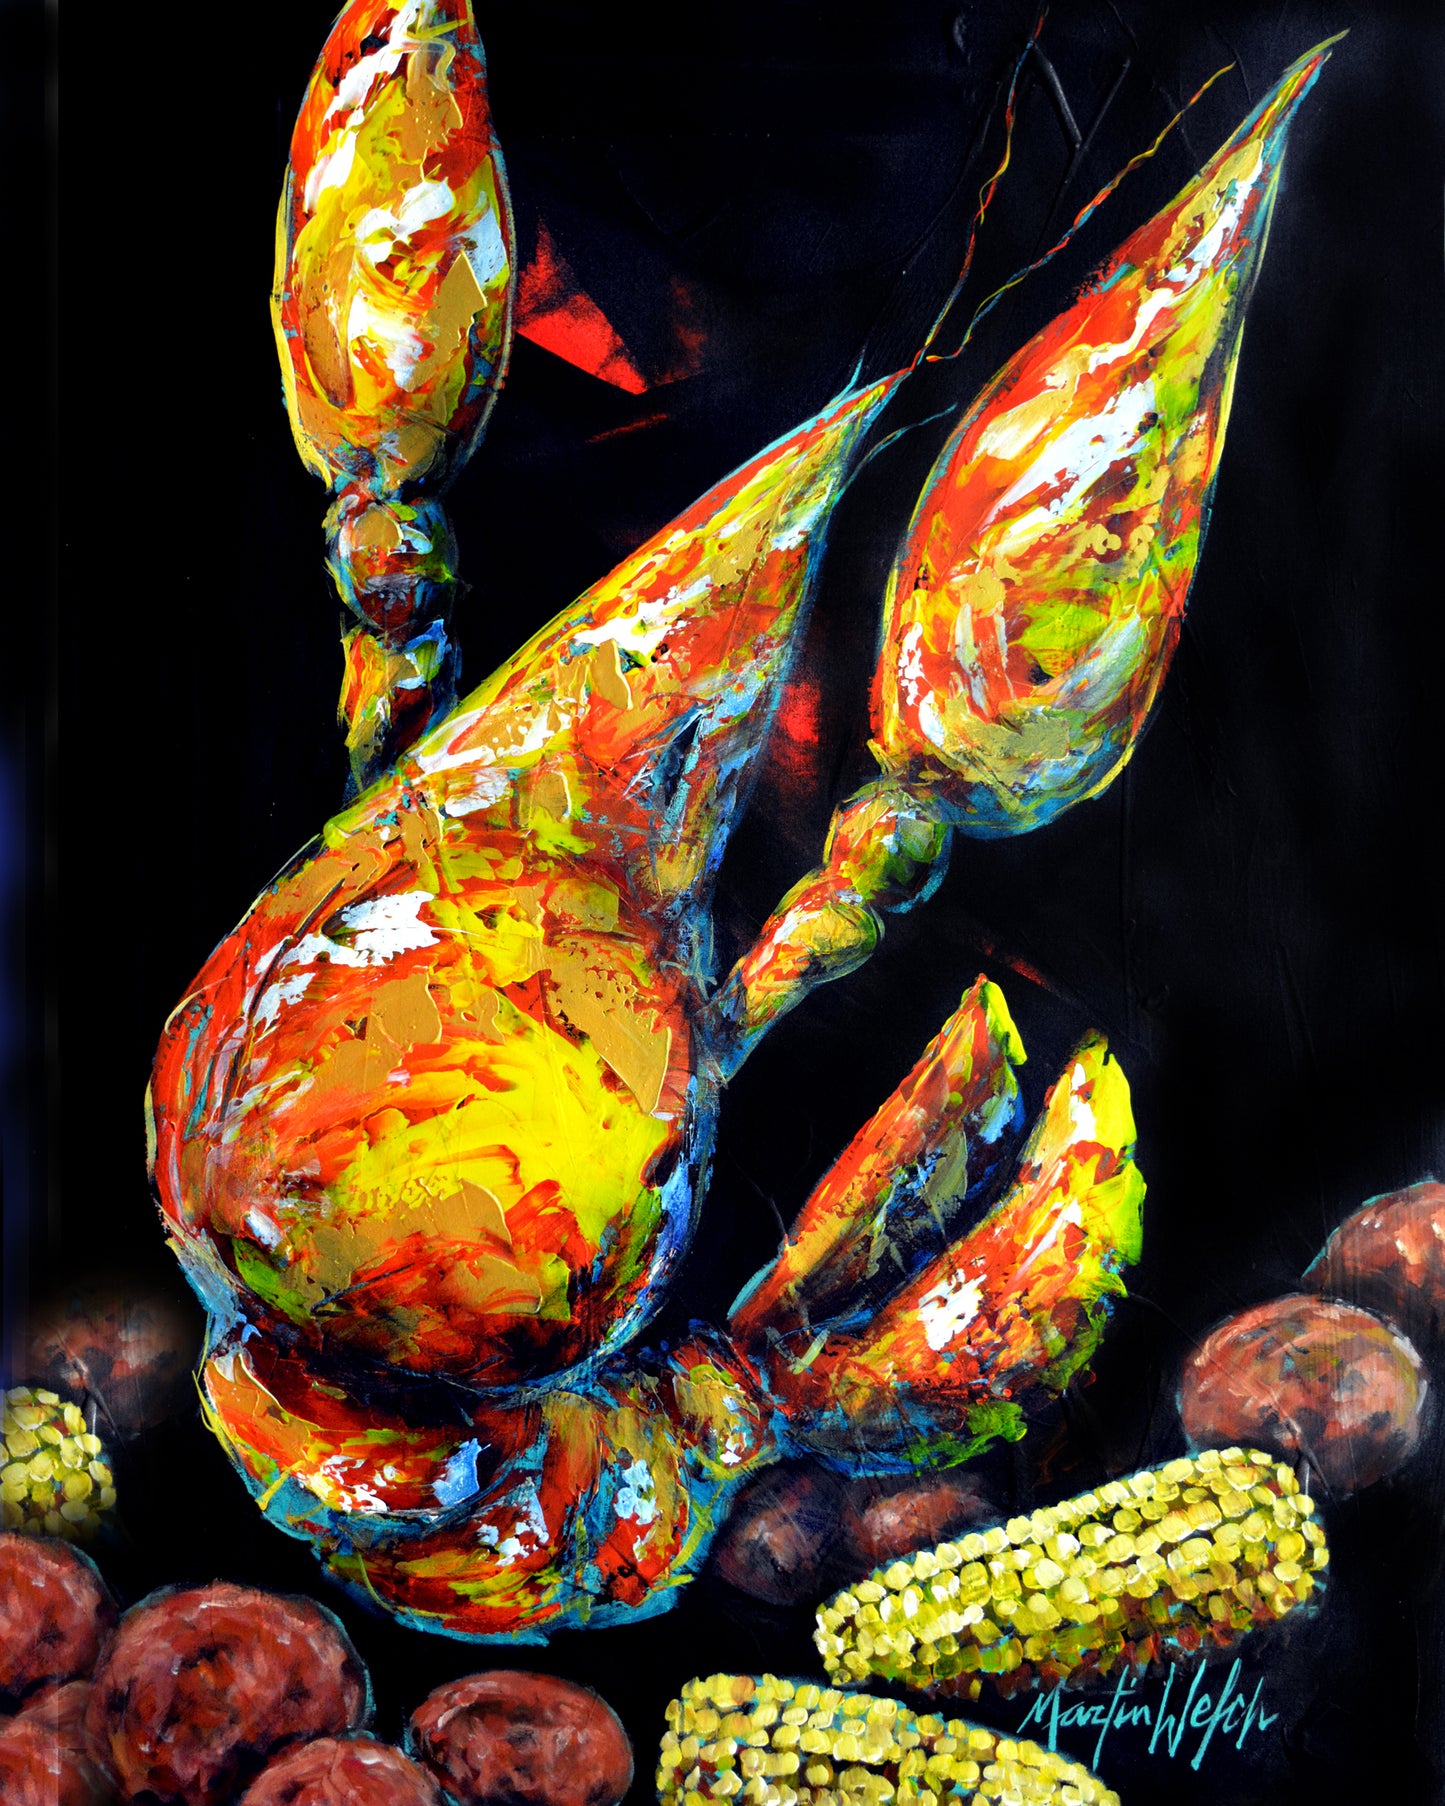 Boiling Pot - Crawfish, Corn, Potatoes - 11"x14" Print